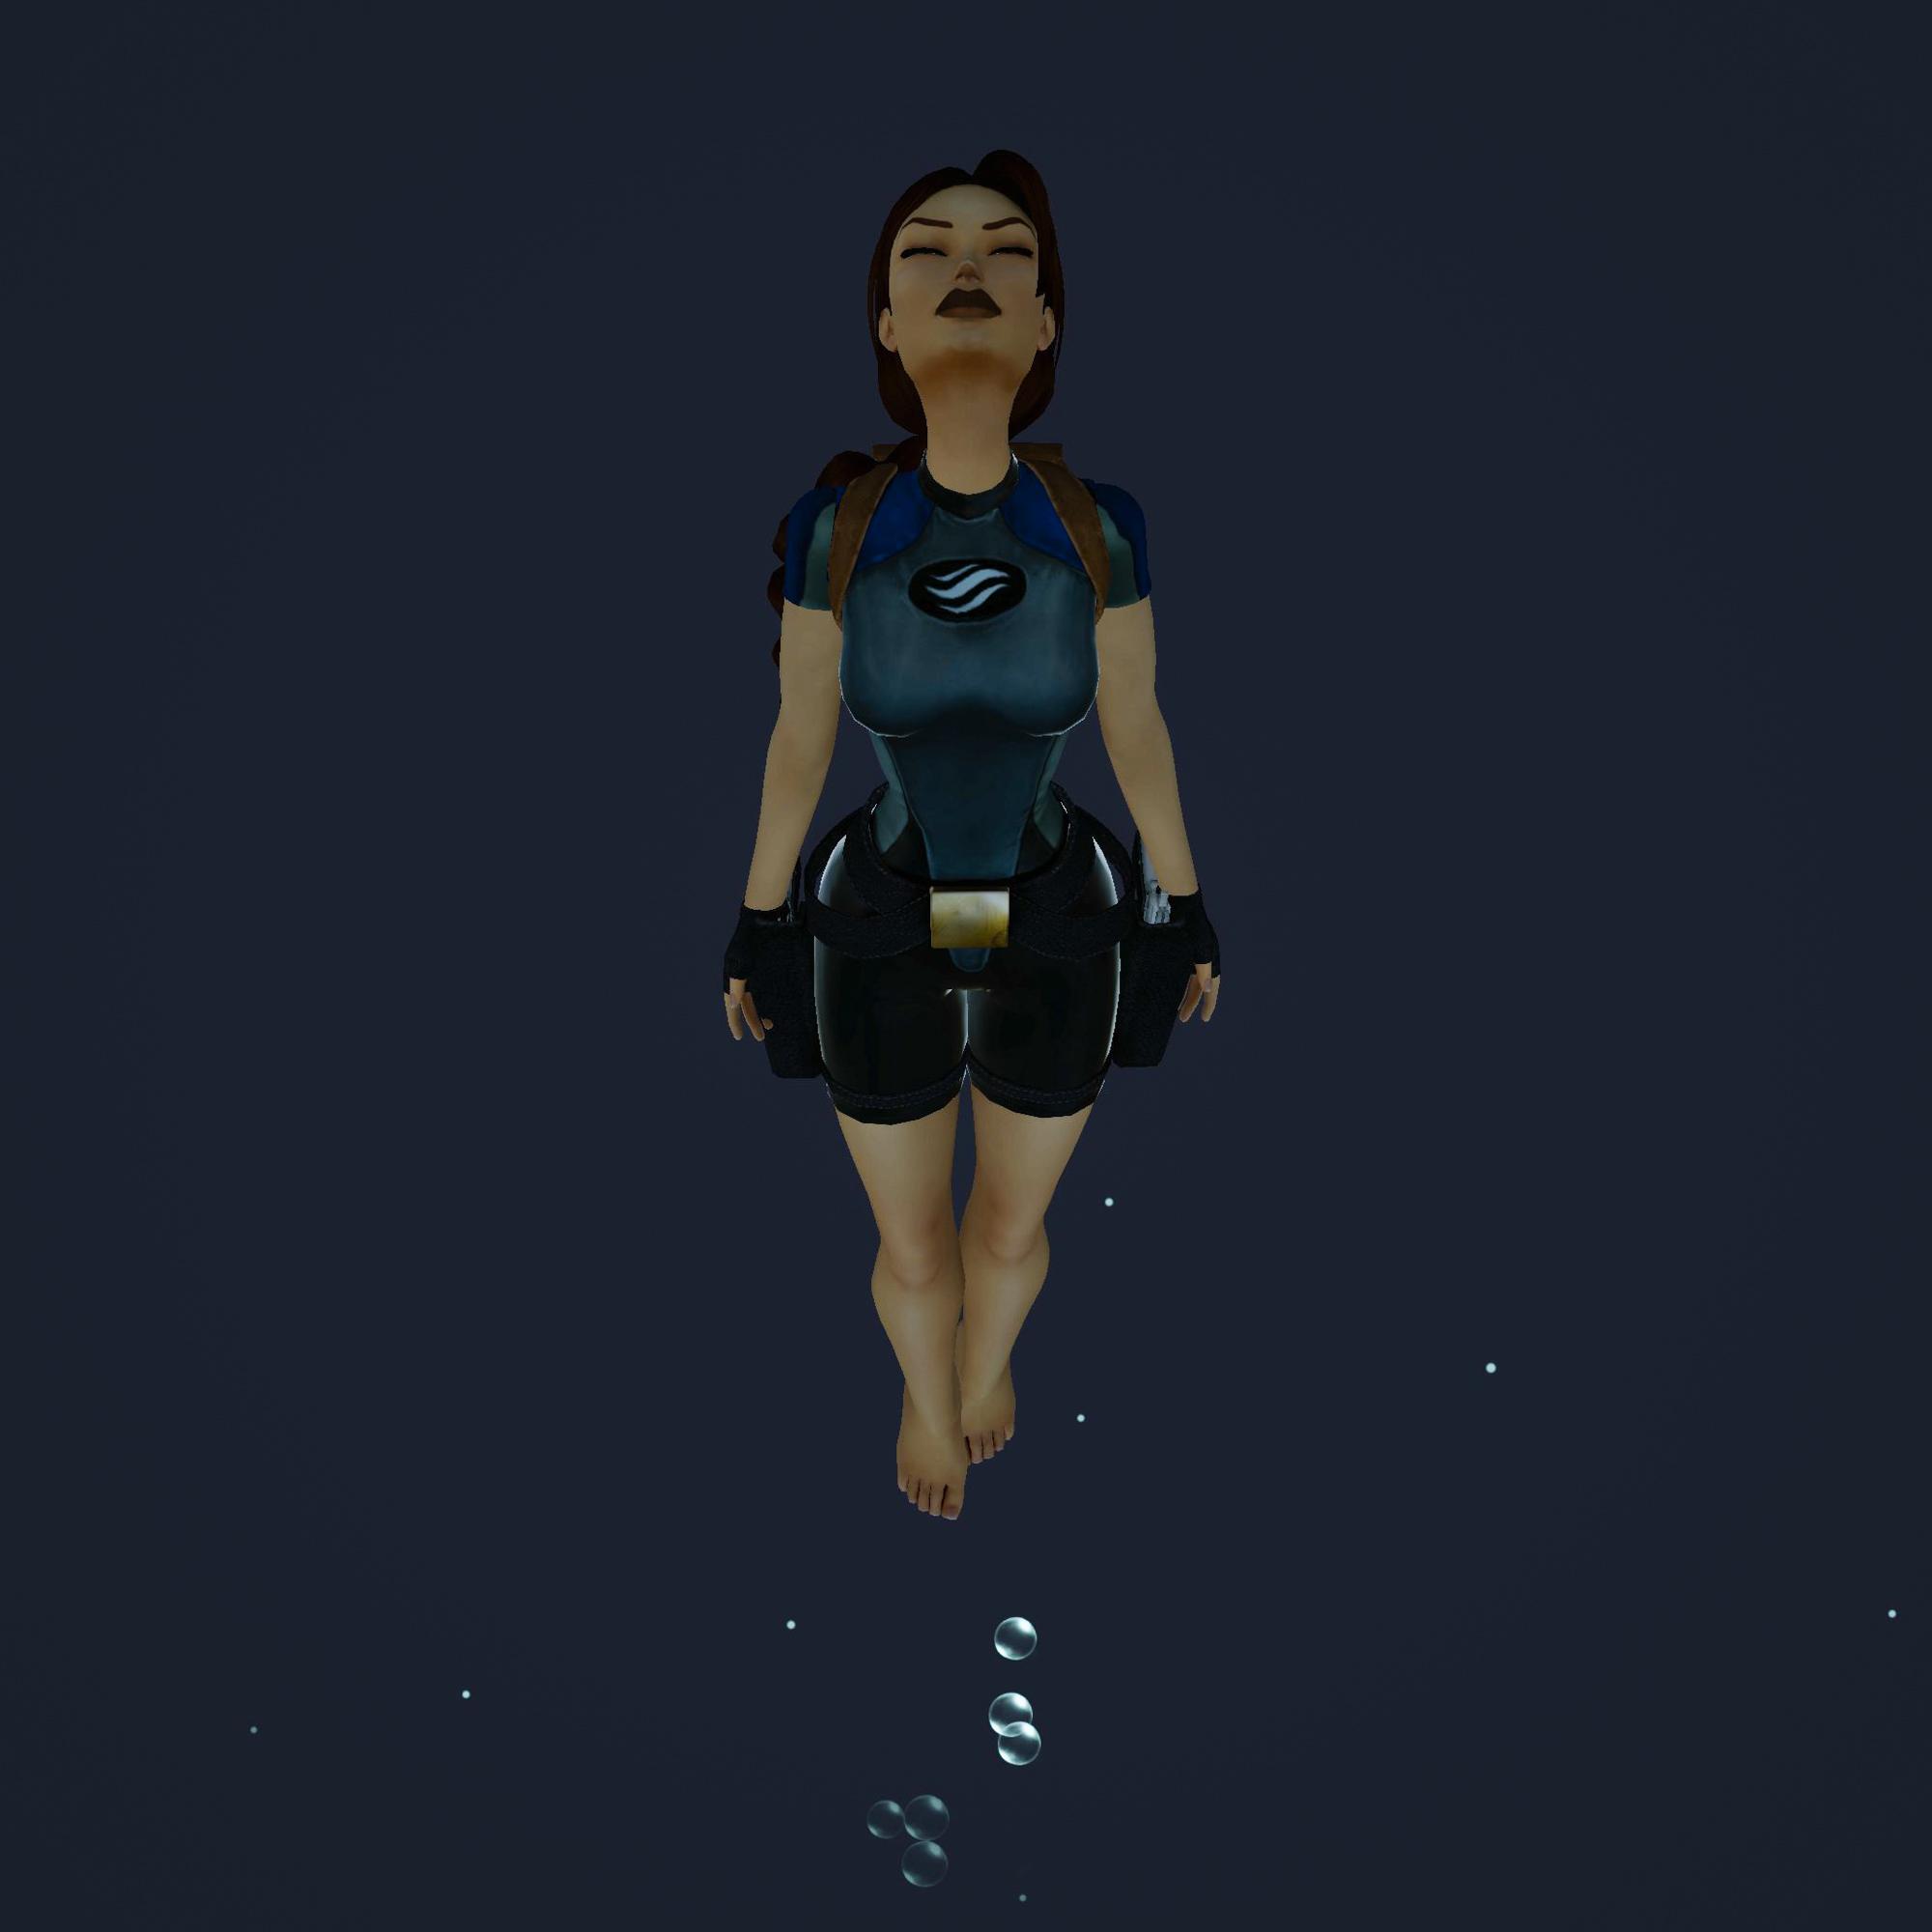 Lara Croft diving in the level 40 Fathoms.